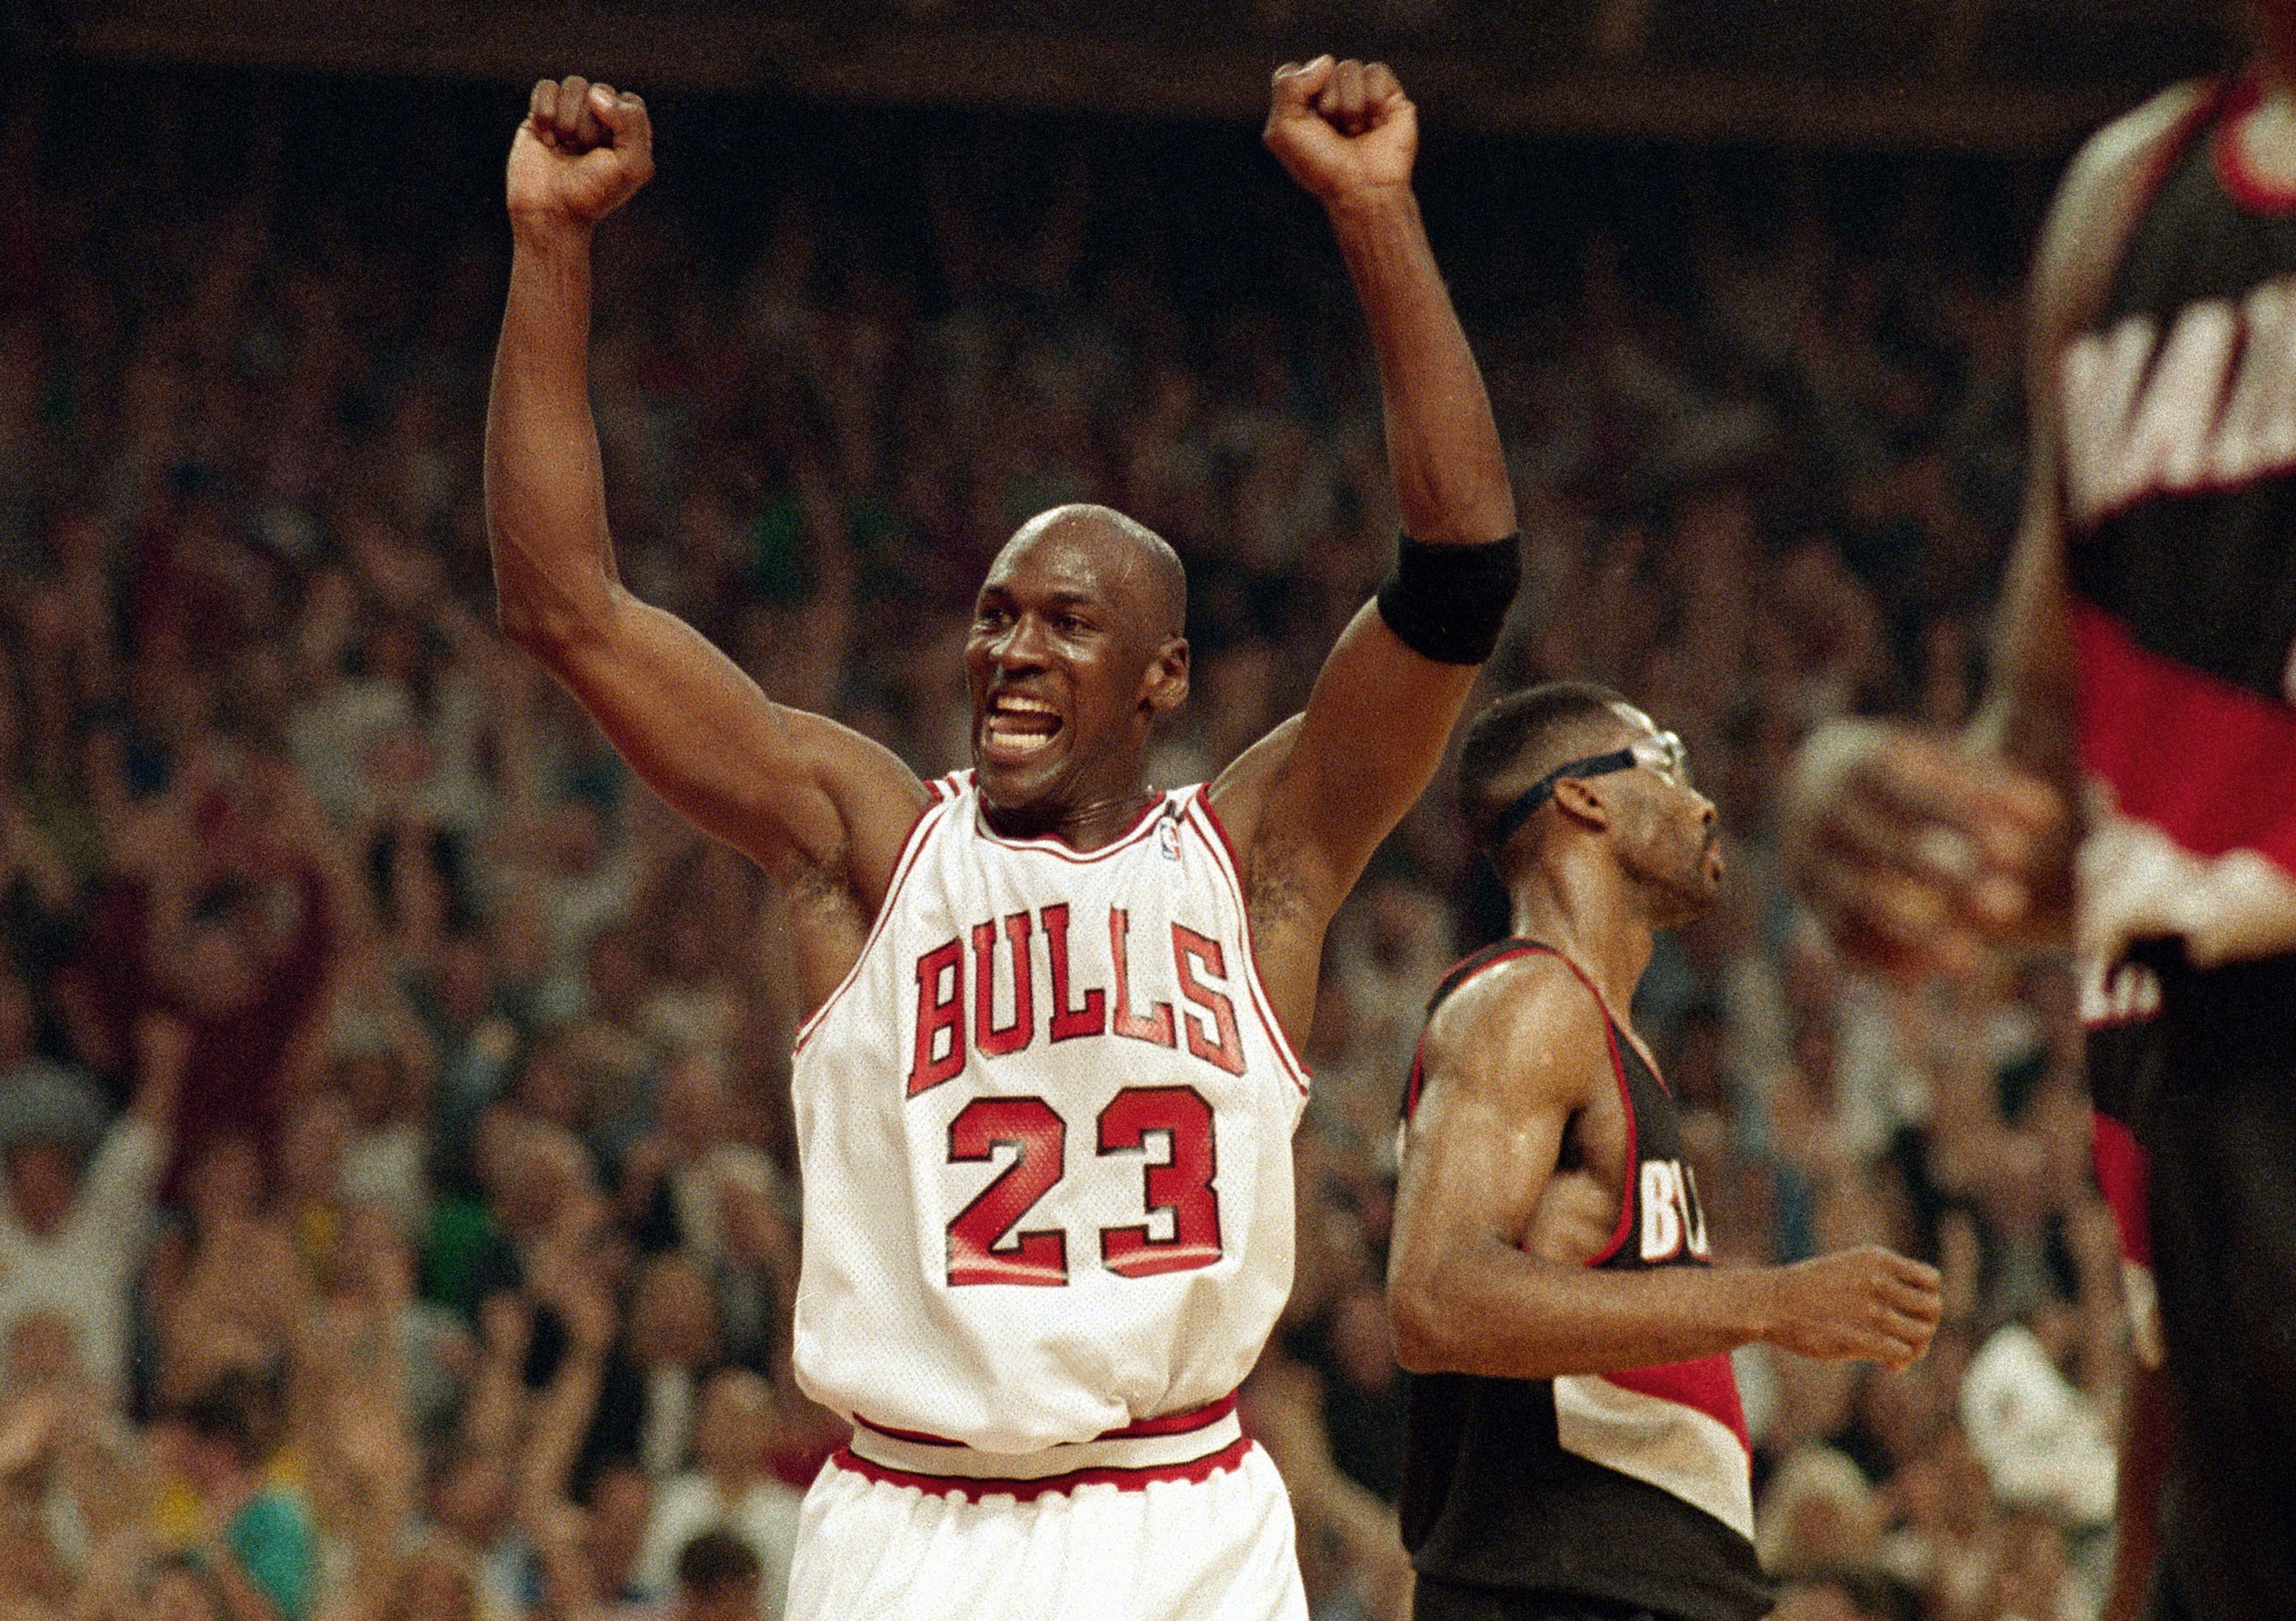 NBA Legend GETS SCHOOLED in Jordan vs LeBron Debate 